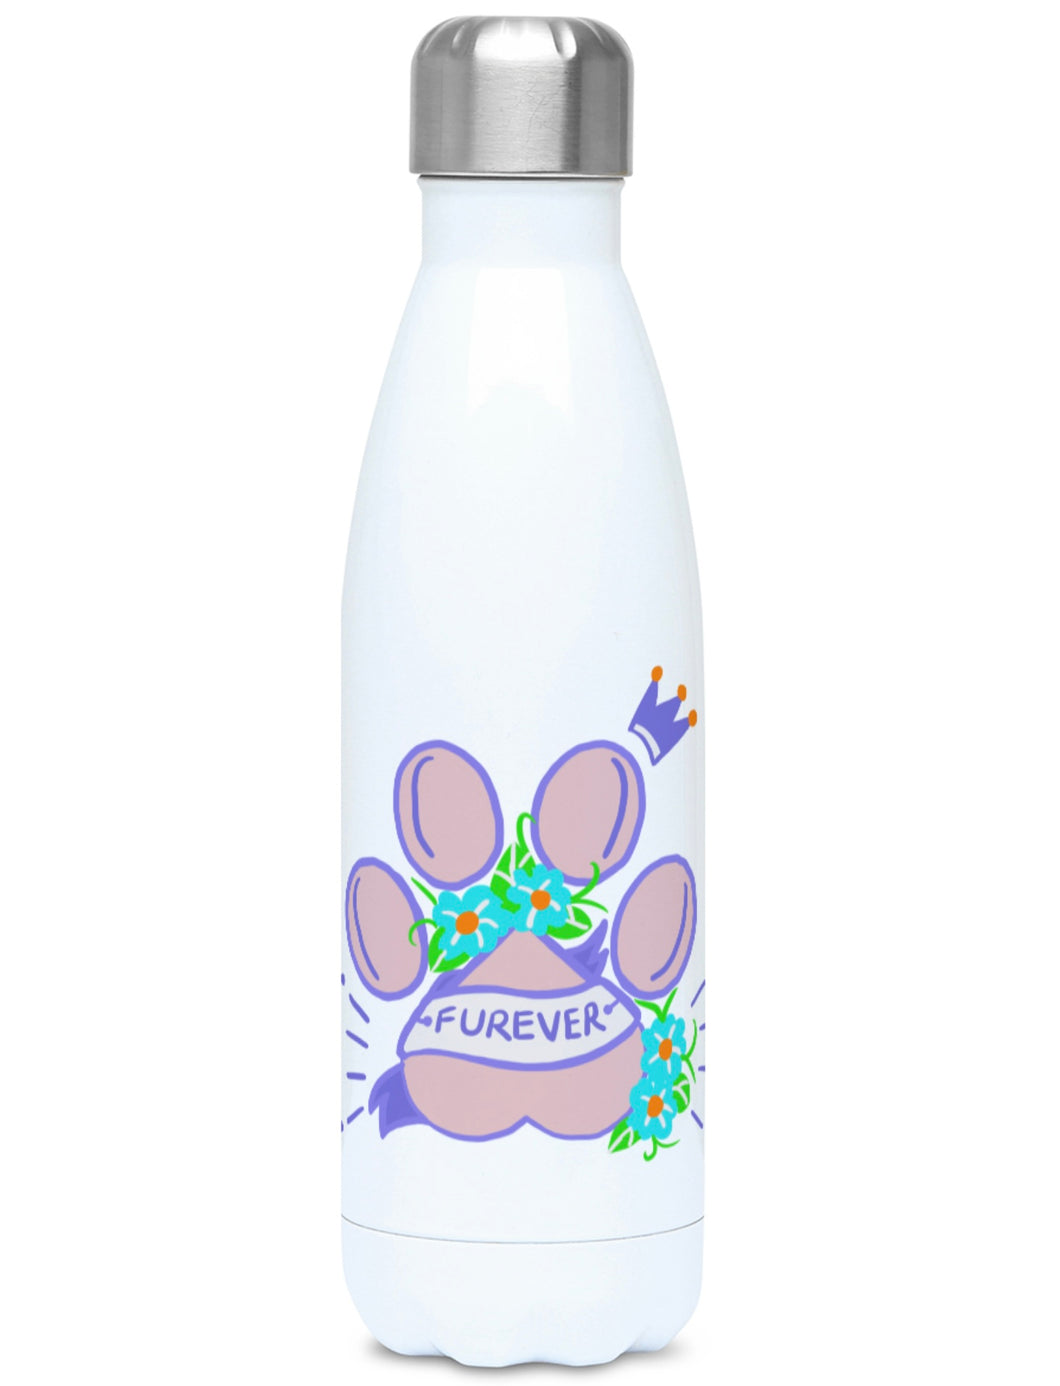 Furever Water Bottle